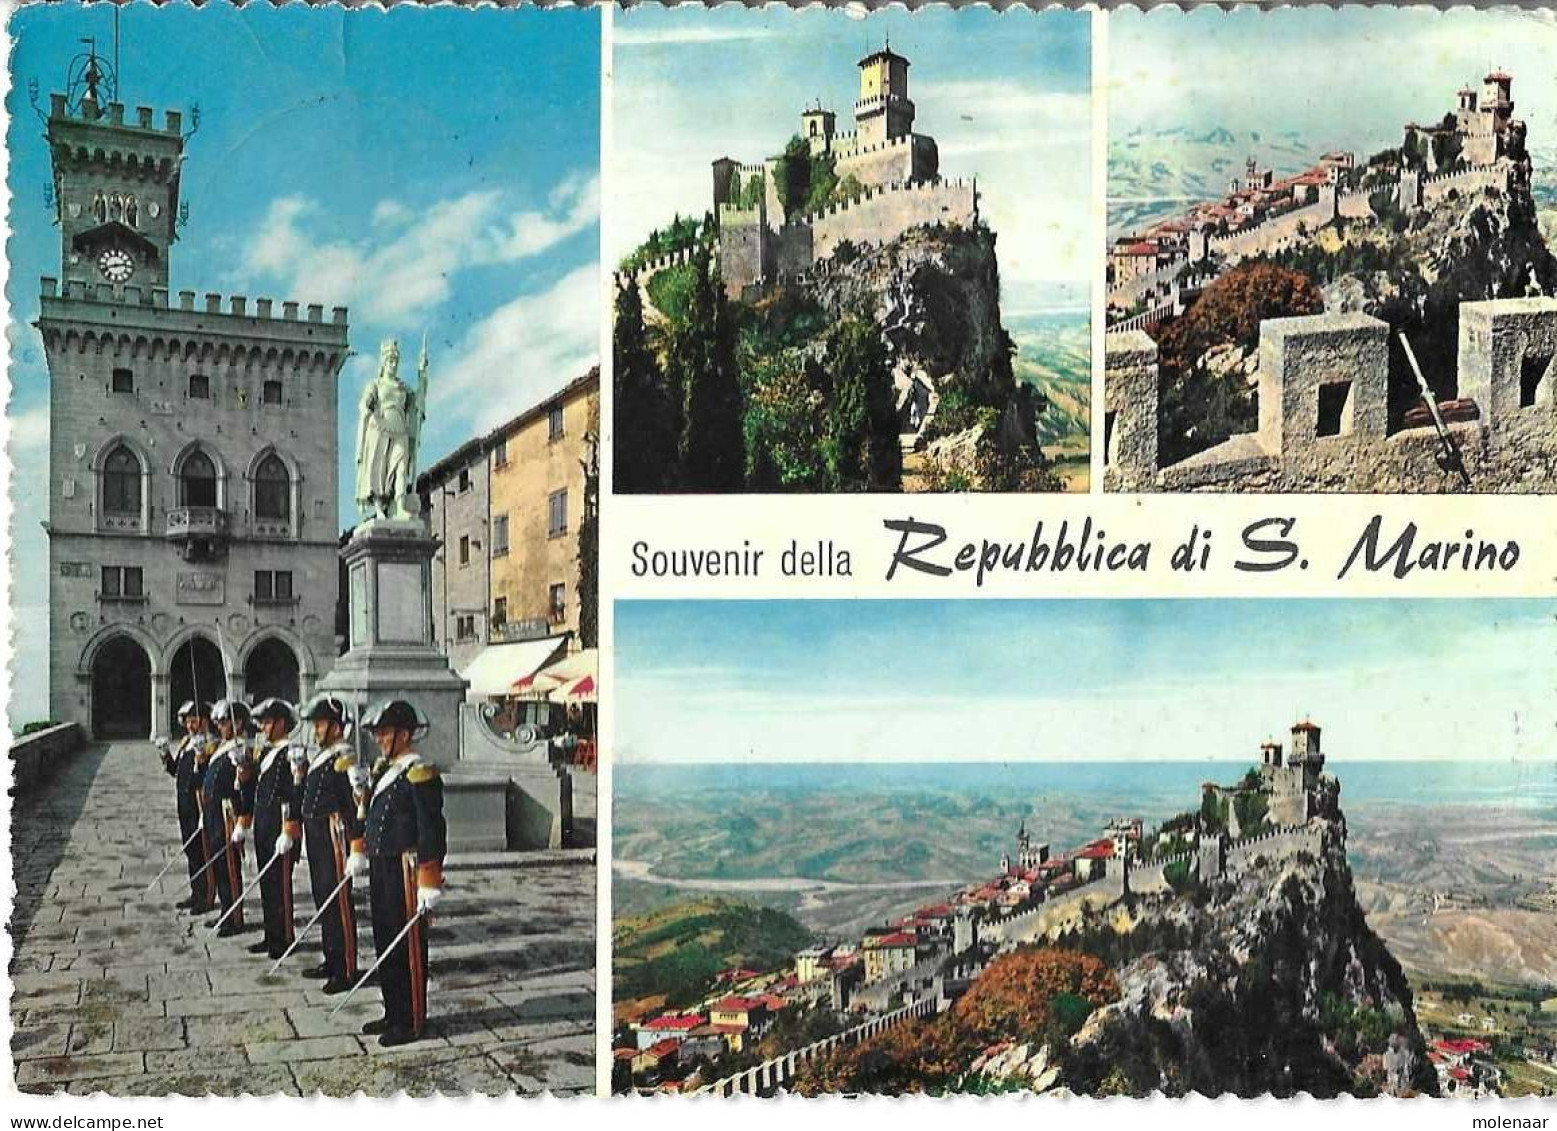 Postzegels > Europa > San Marino > 1940-59 > Kaart Uit 1951 Met 616900a Postzegels (16990) - Covers & Documents